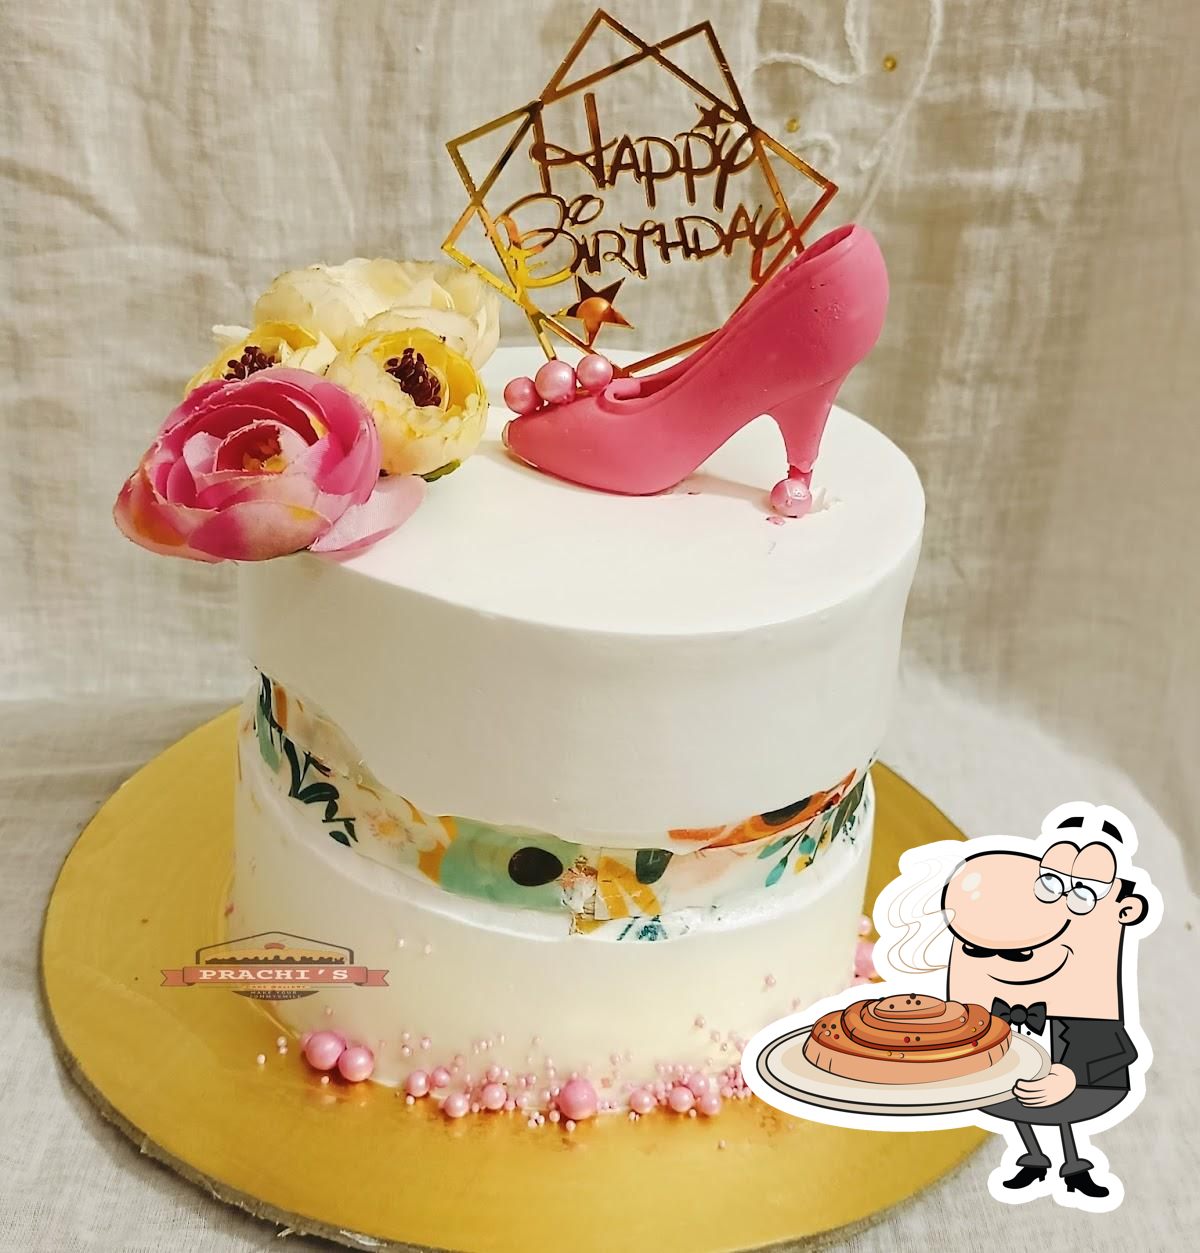 Discover more than 80 happy birthday prachi cake super hot - in.daotaonec